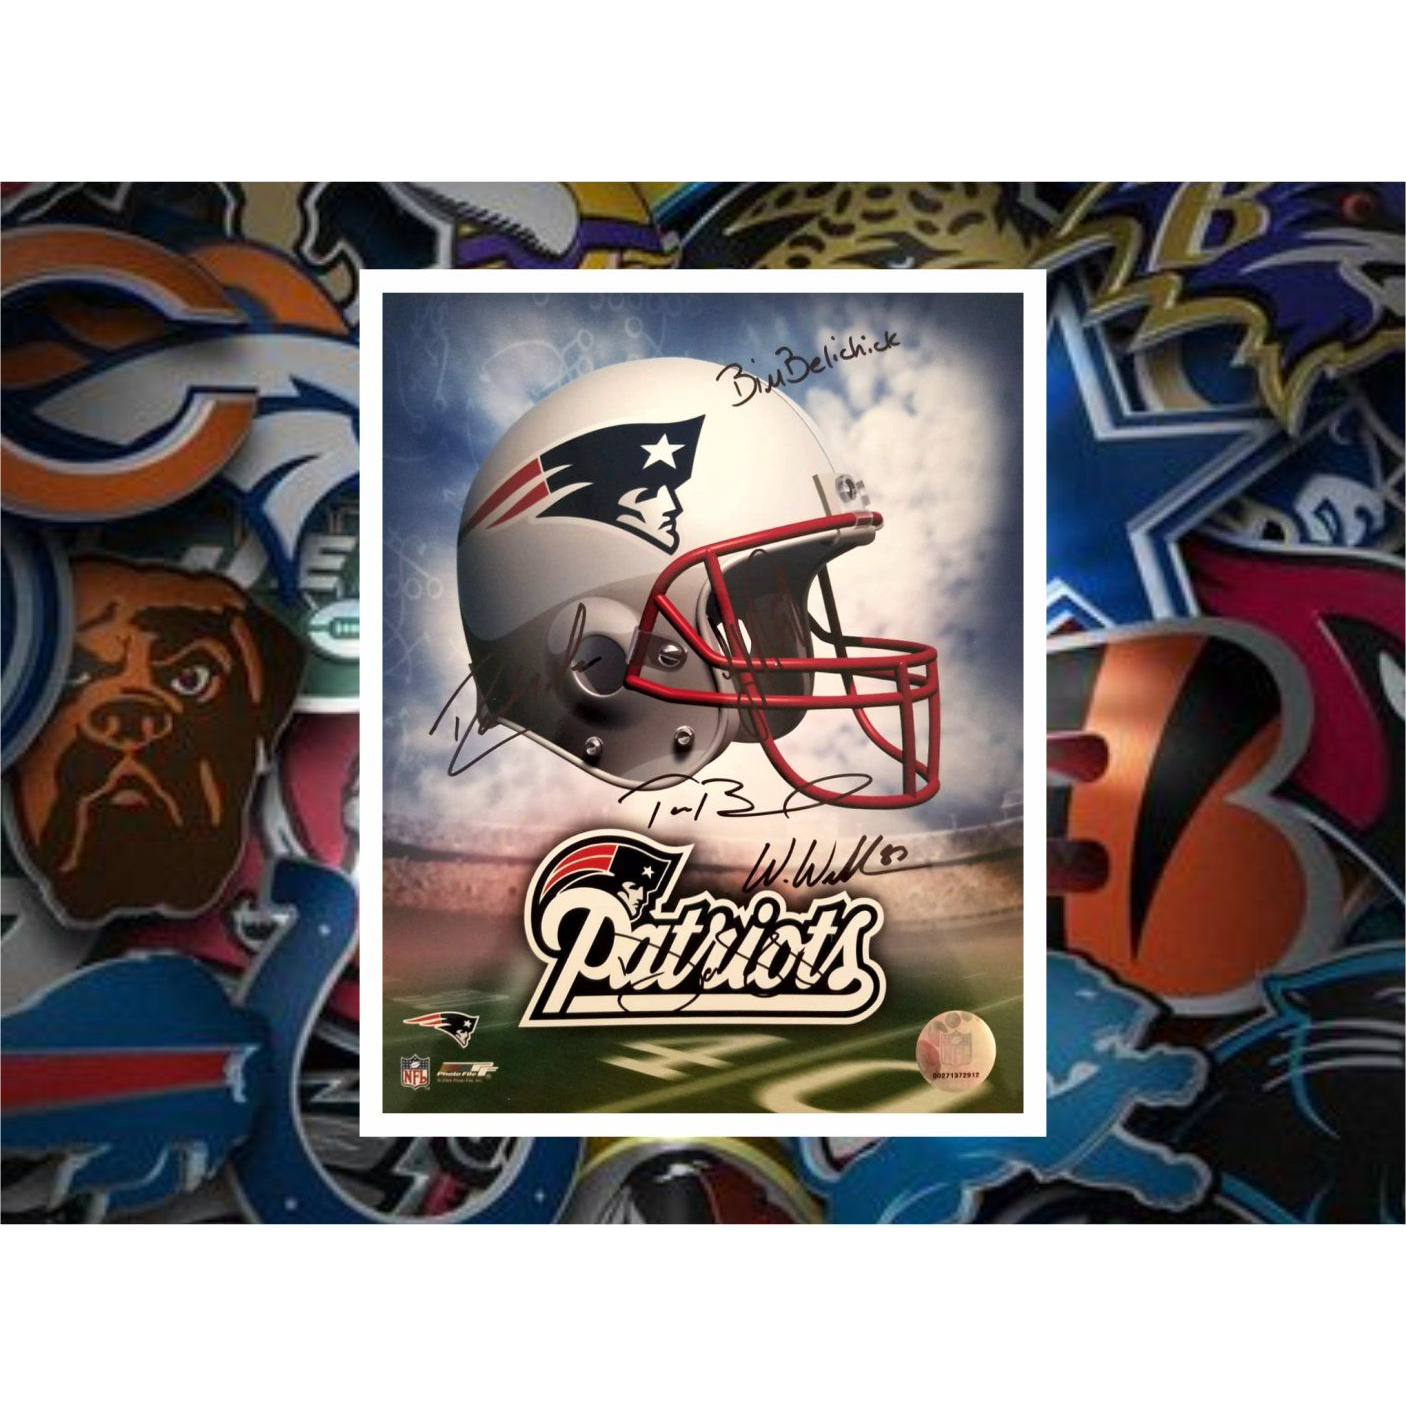 New England Patriots Tom Brady West Welker Randy Moss Bill Belichick Dante Stallworth 8x10 photo signed